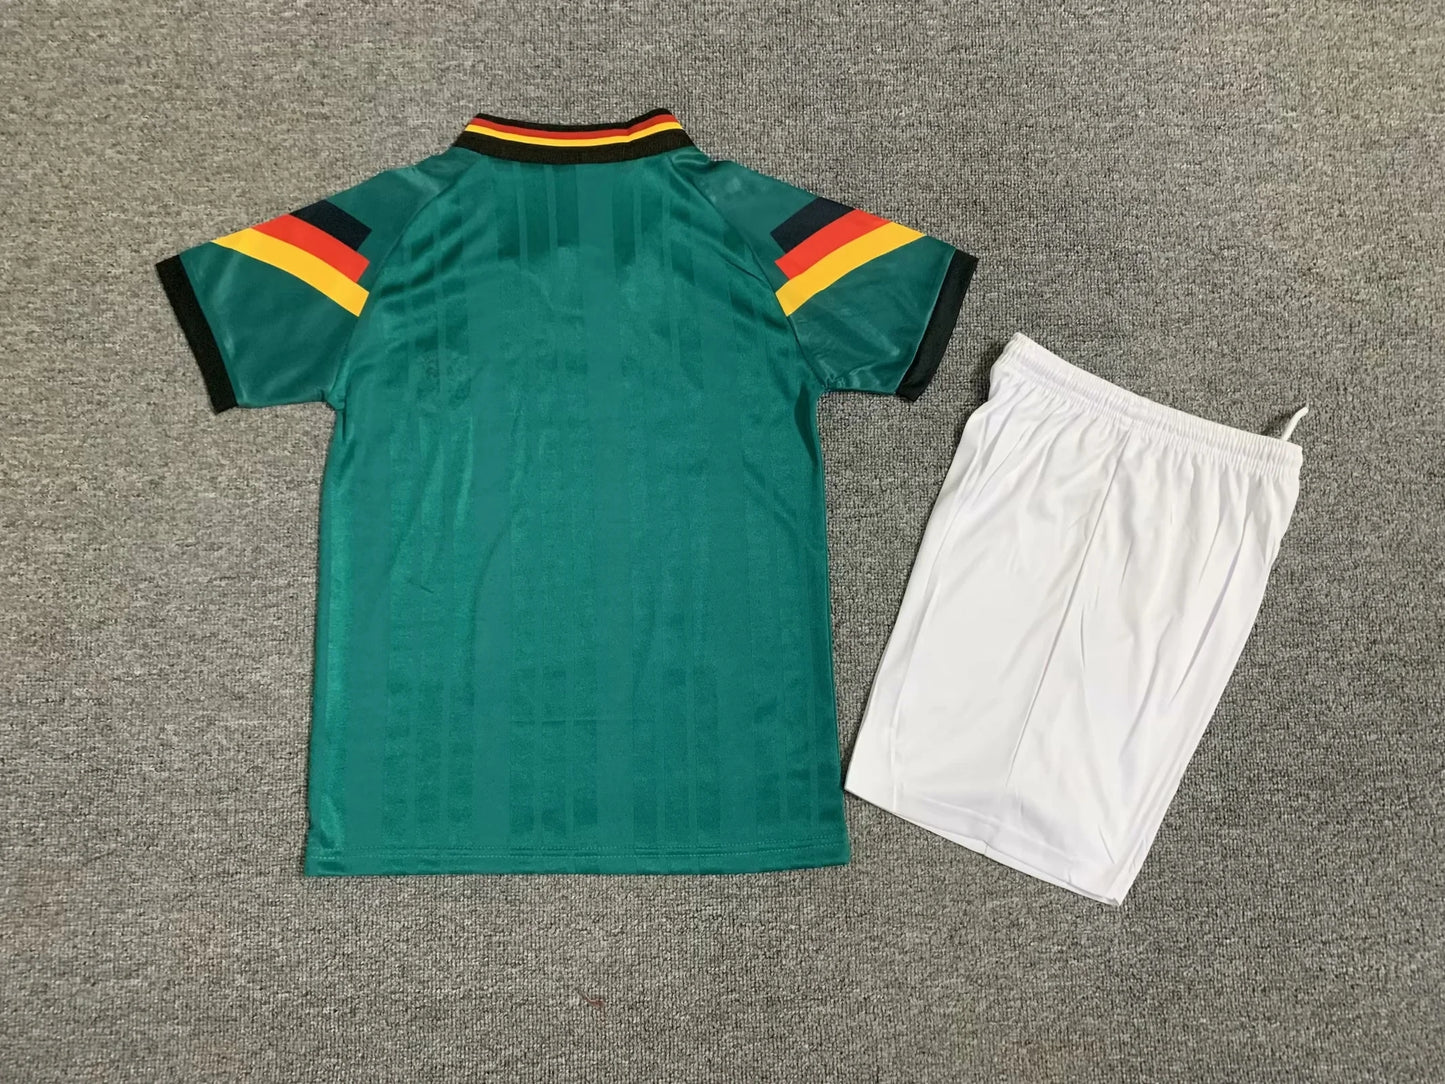 Selección de Alemania. Kit visitante 1992